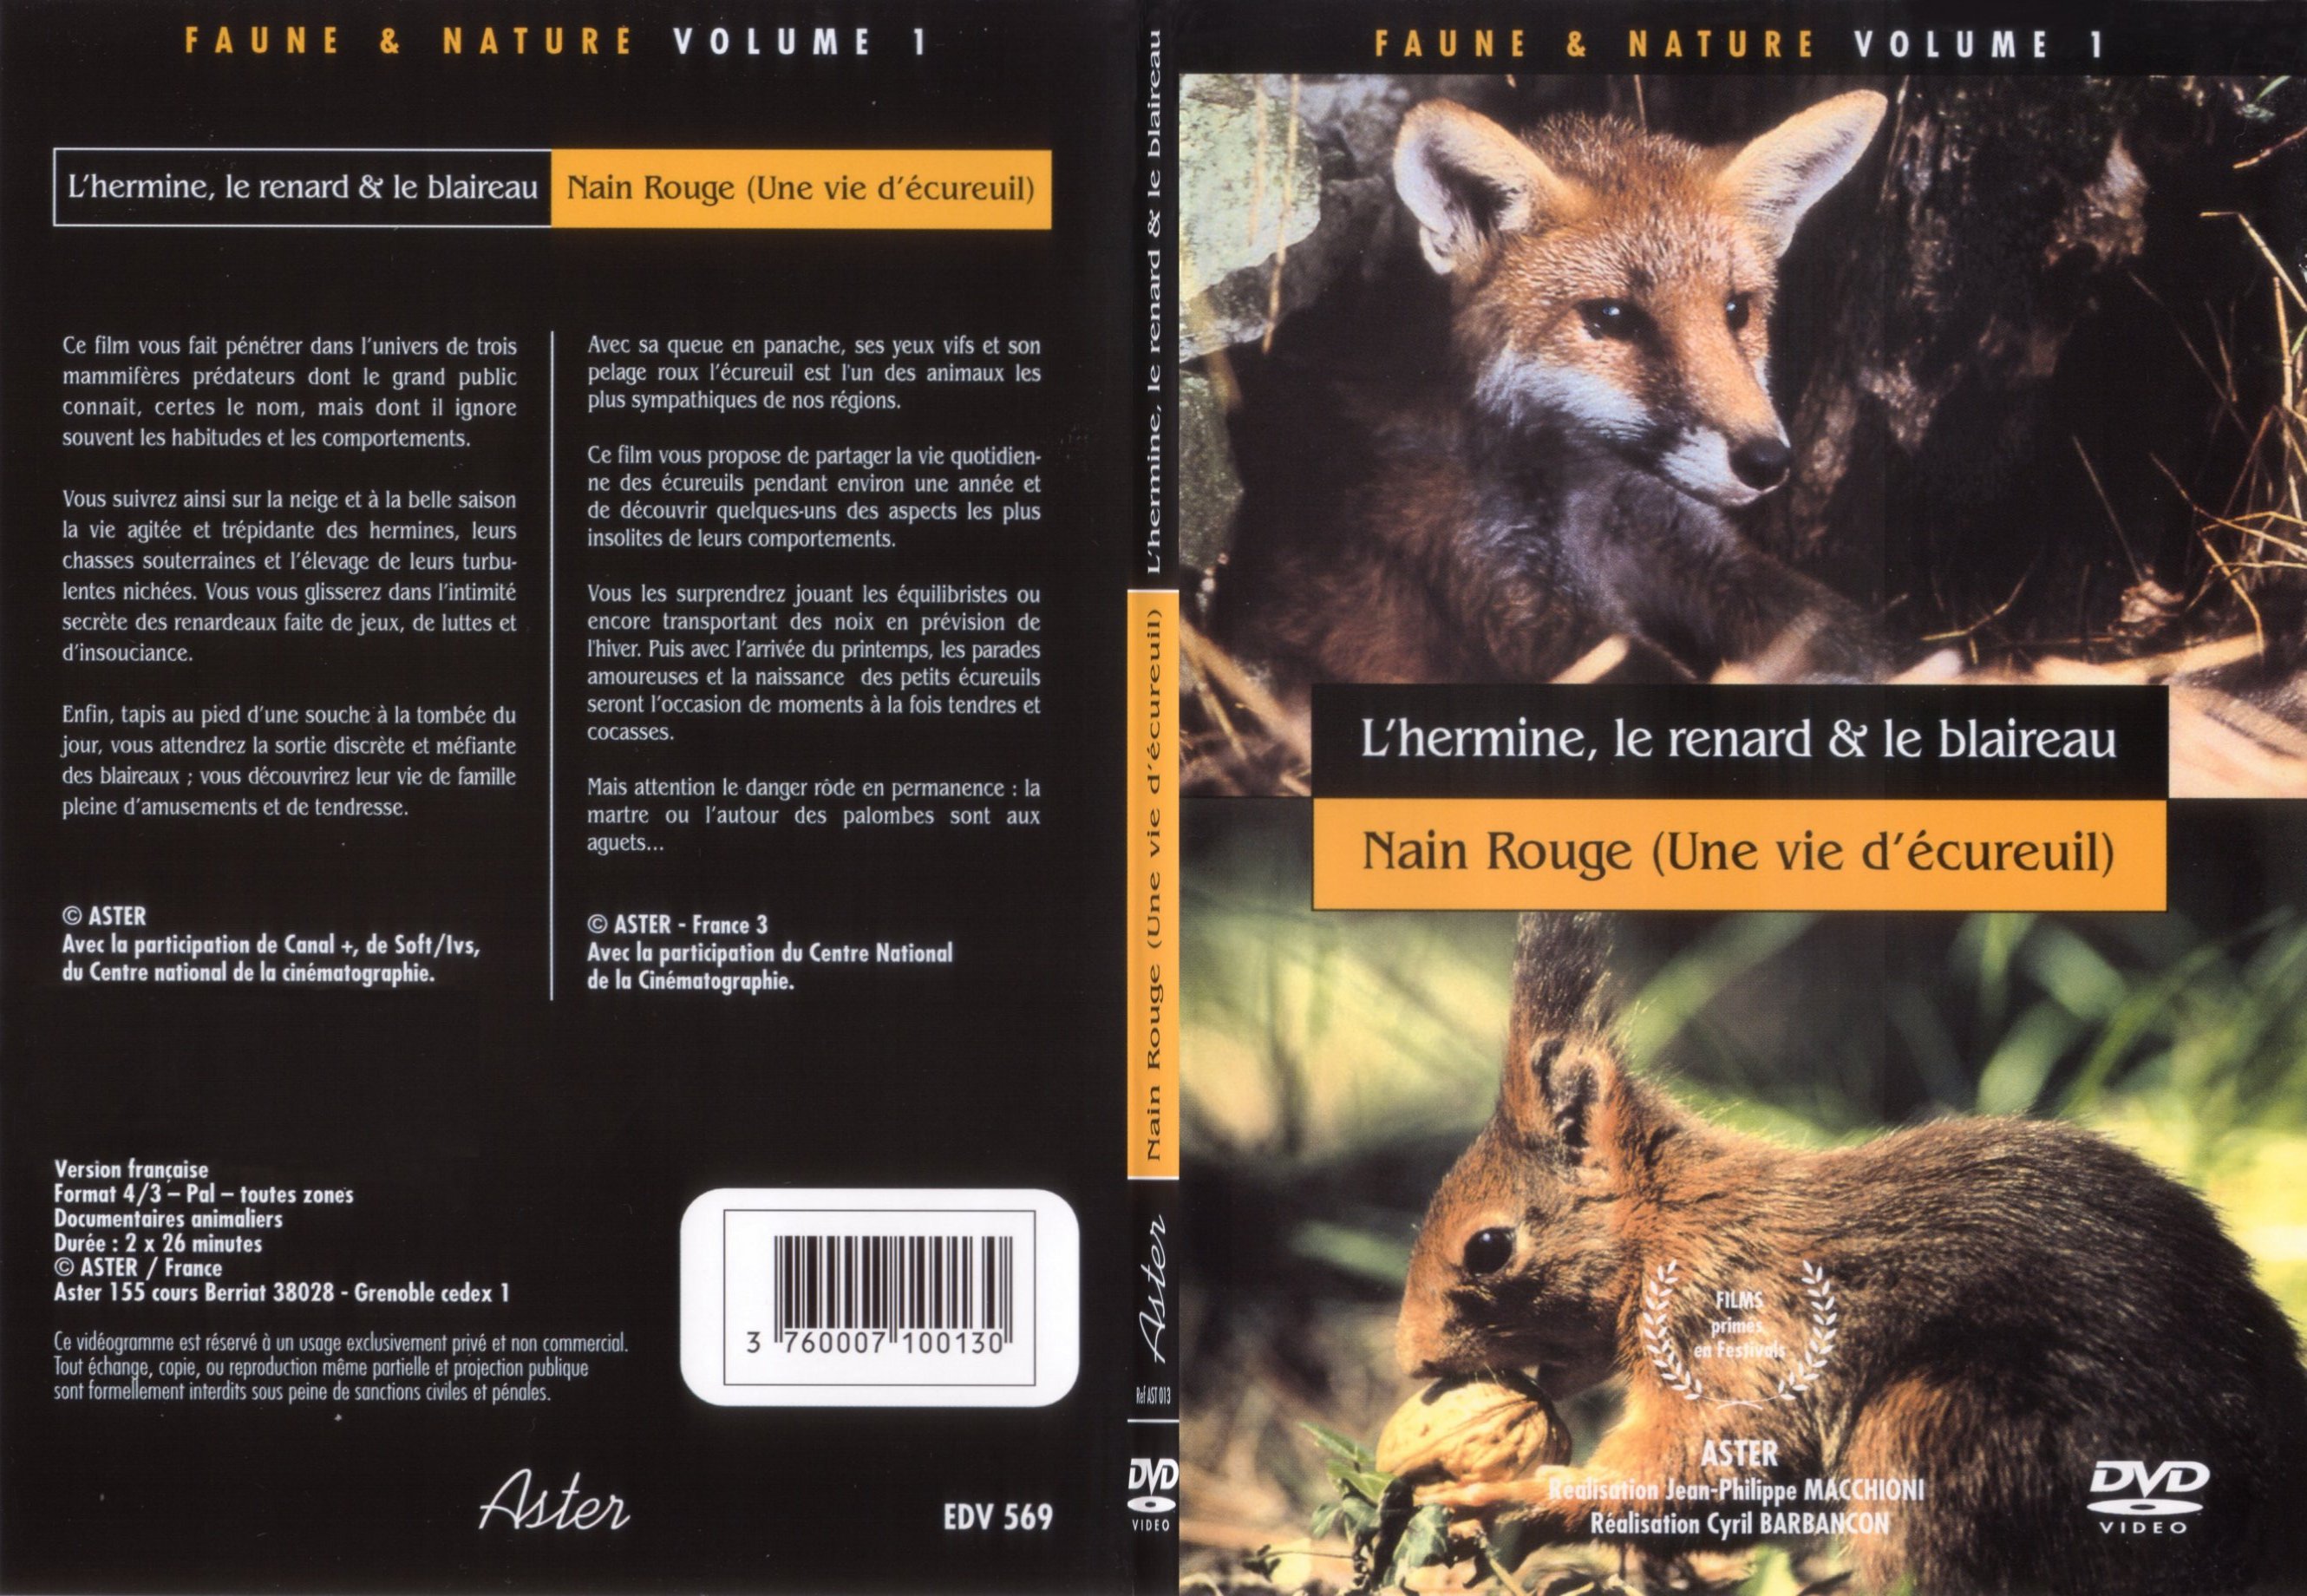 Jaquette DVD Faune et Nature vol 01 - SLIM